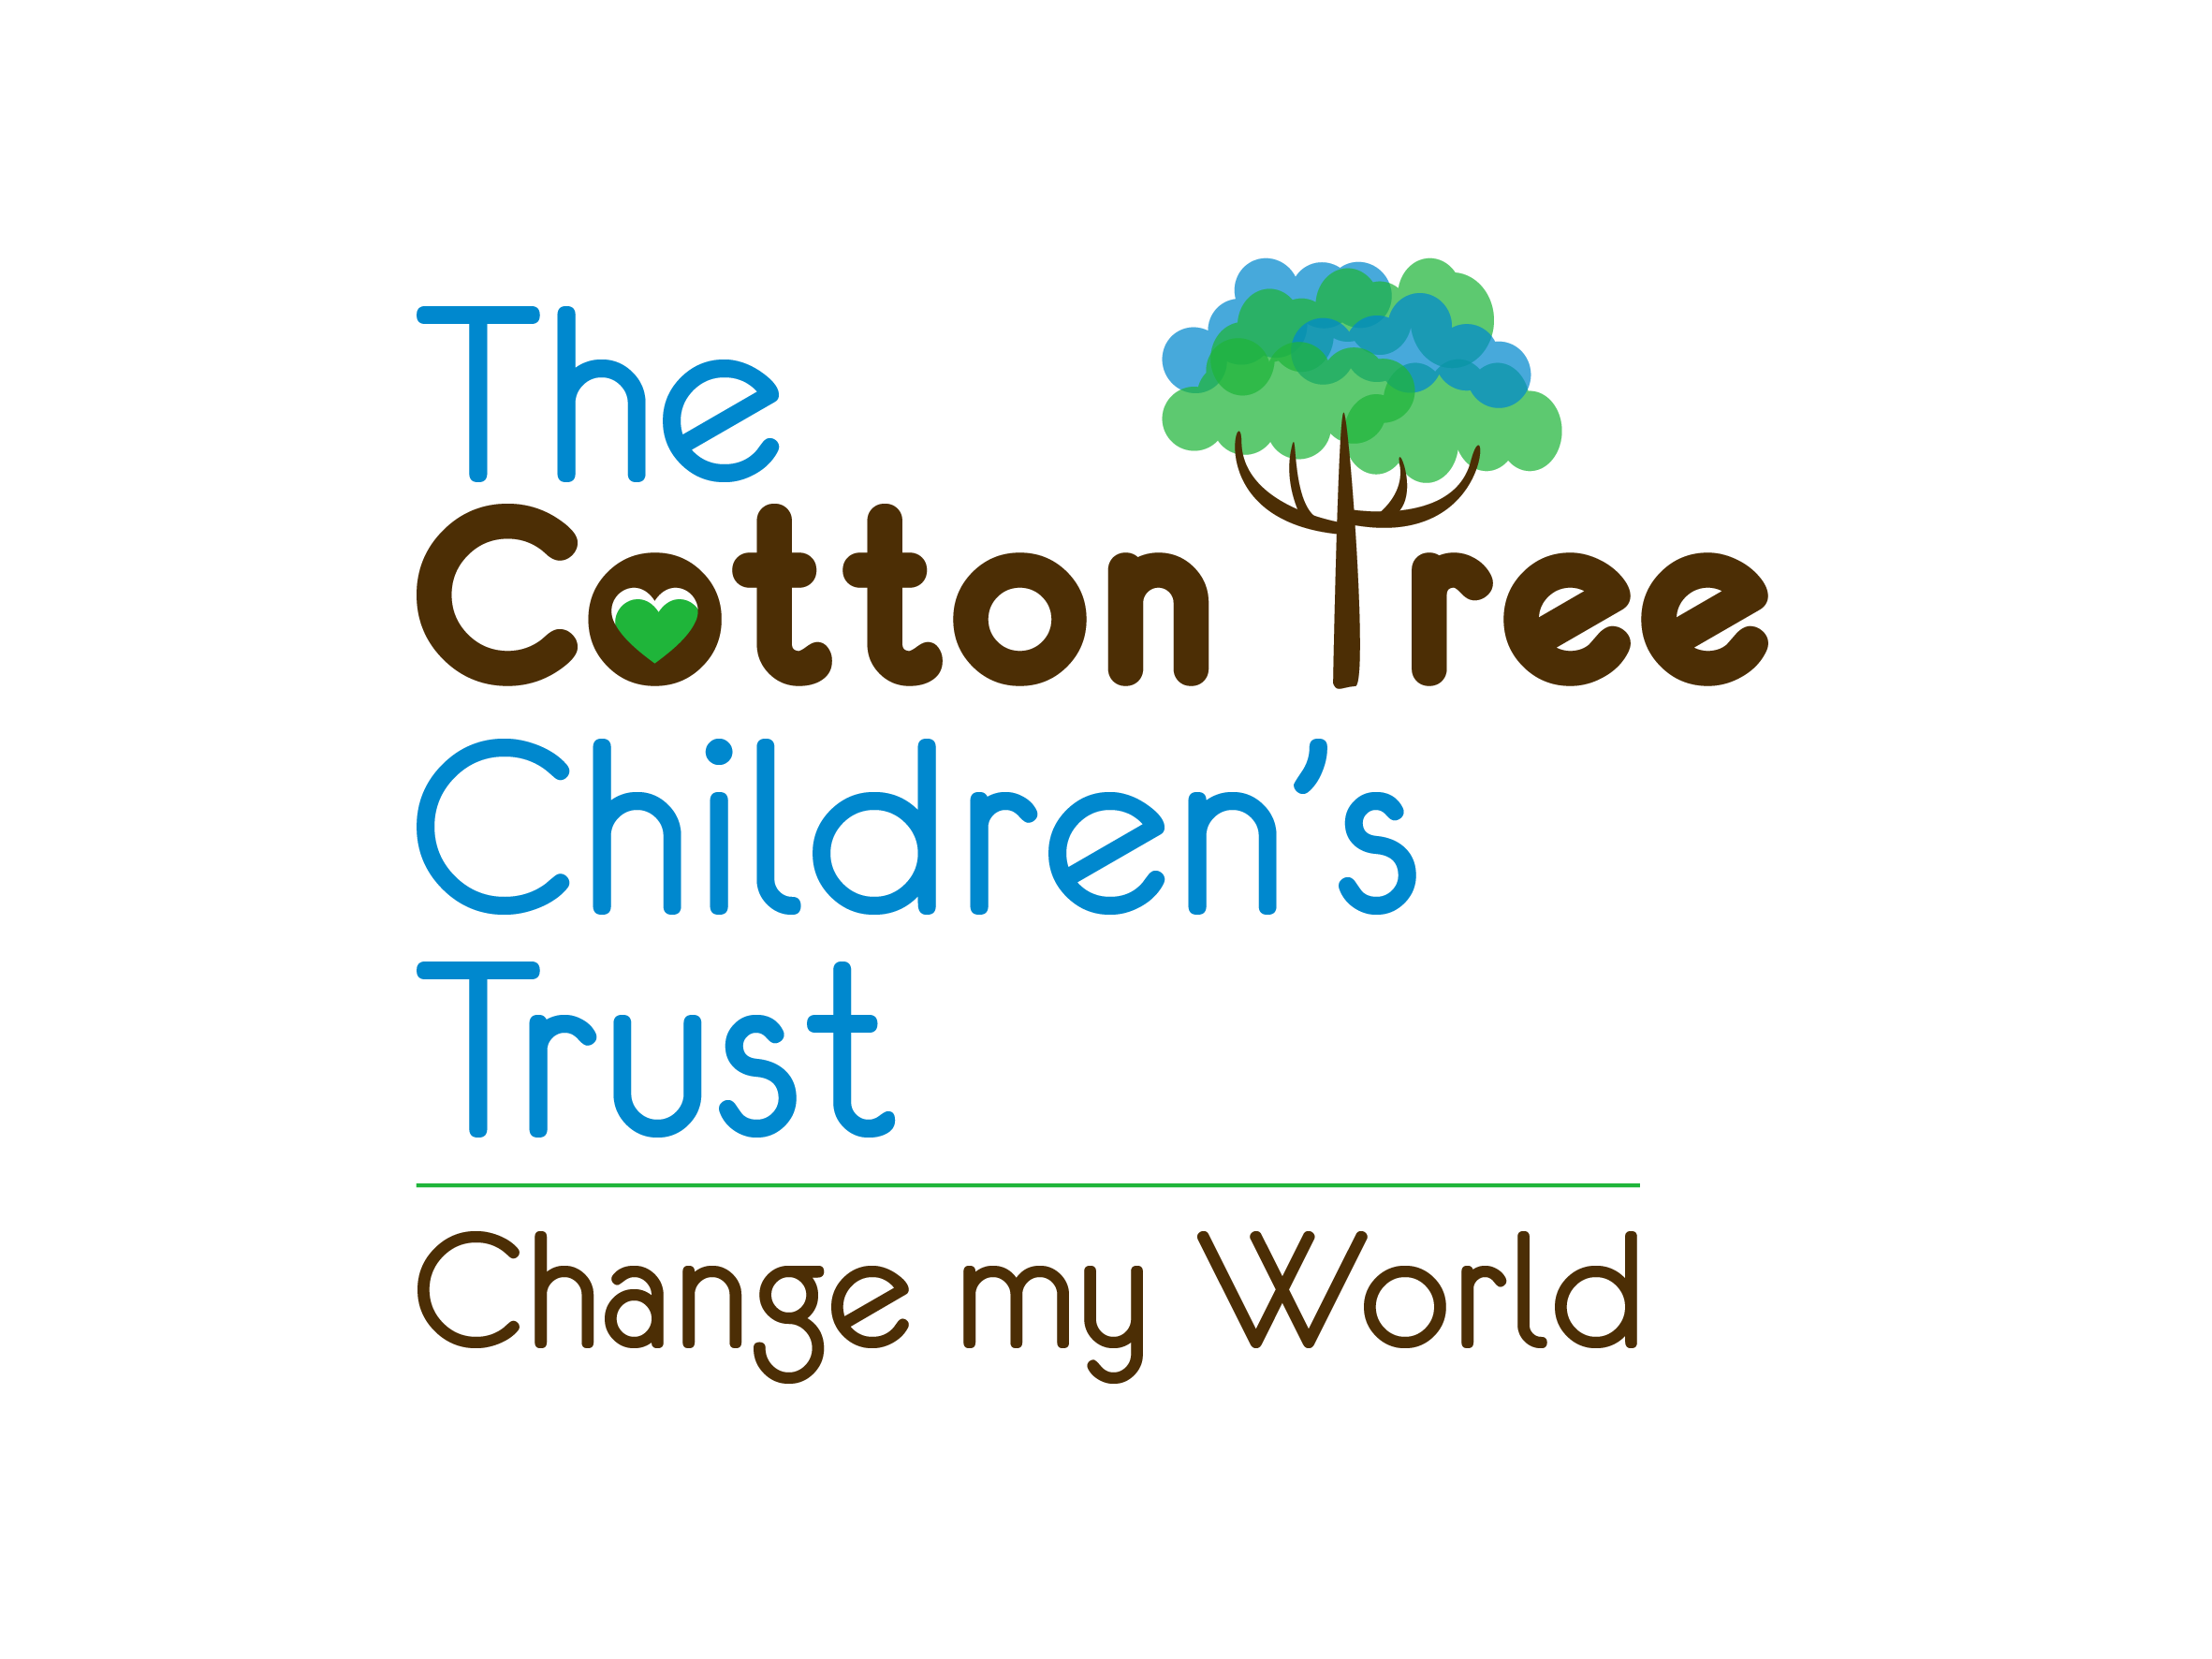 The Cotton Tree Children’s Trust Charity organisation